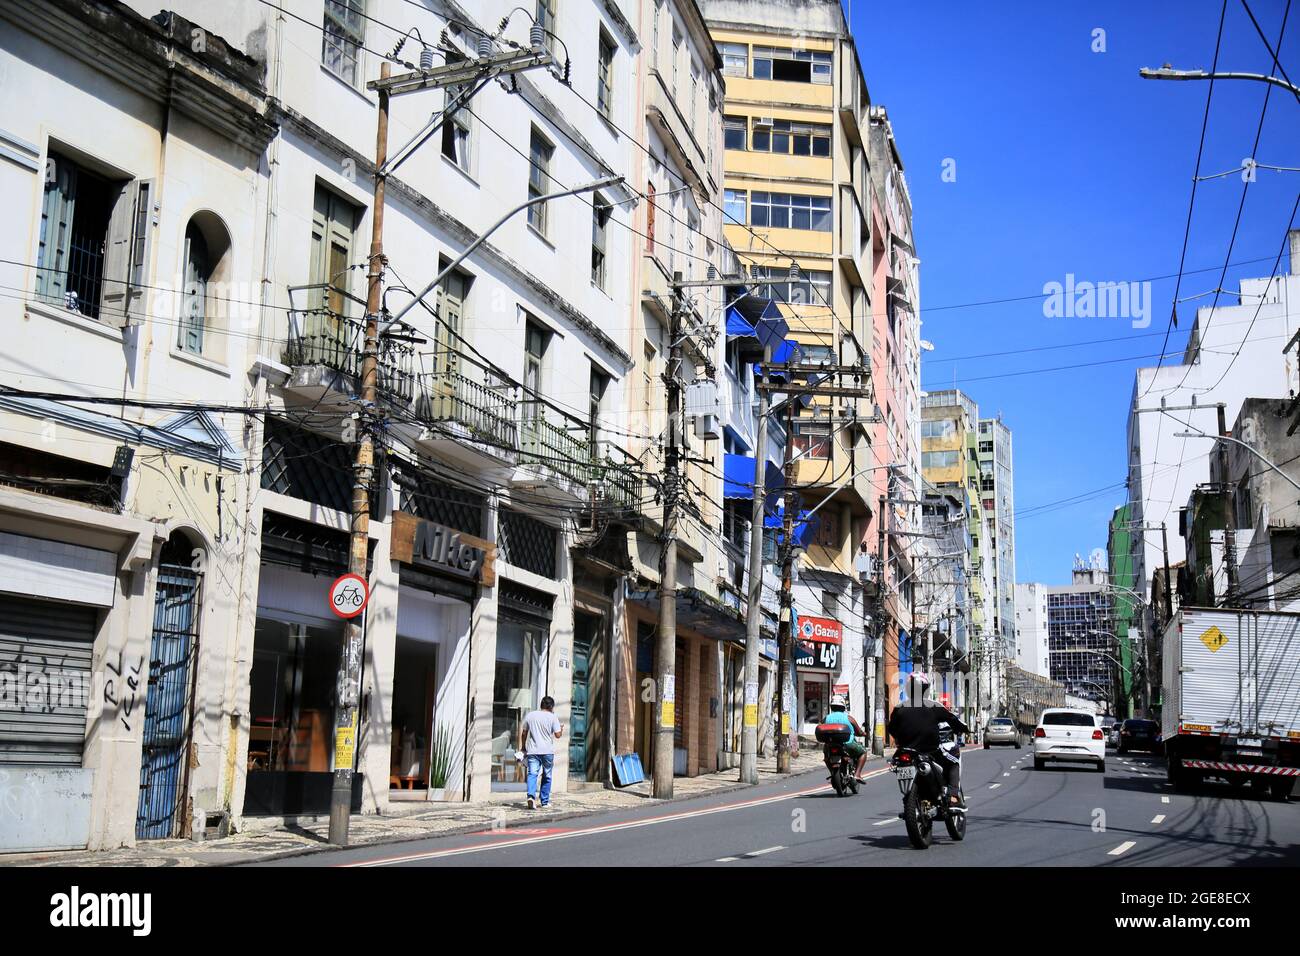 salvador, bahia, brasilien - 17. august 2021: Blick auf alte Gebäude in der Carlos Gomes Straße, Salvador Stadtzentrum. Stockfoto